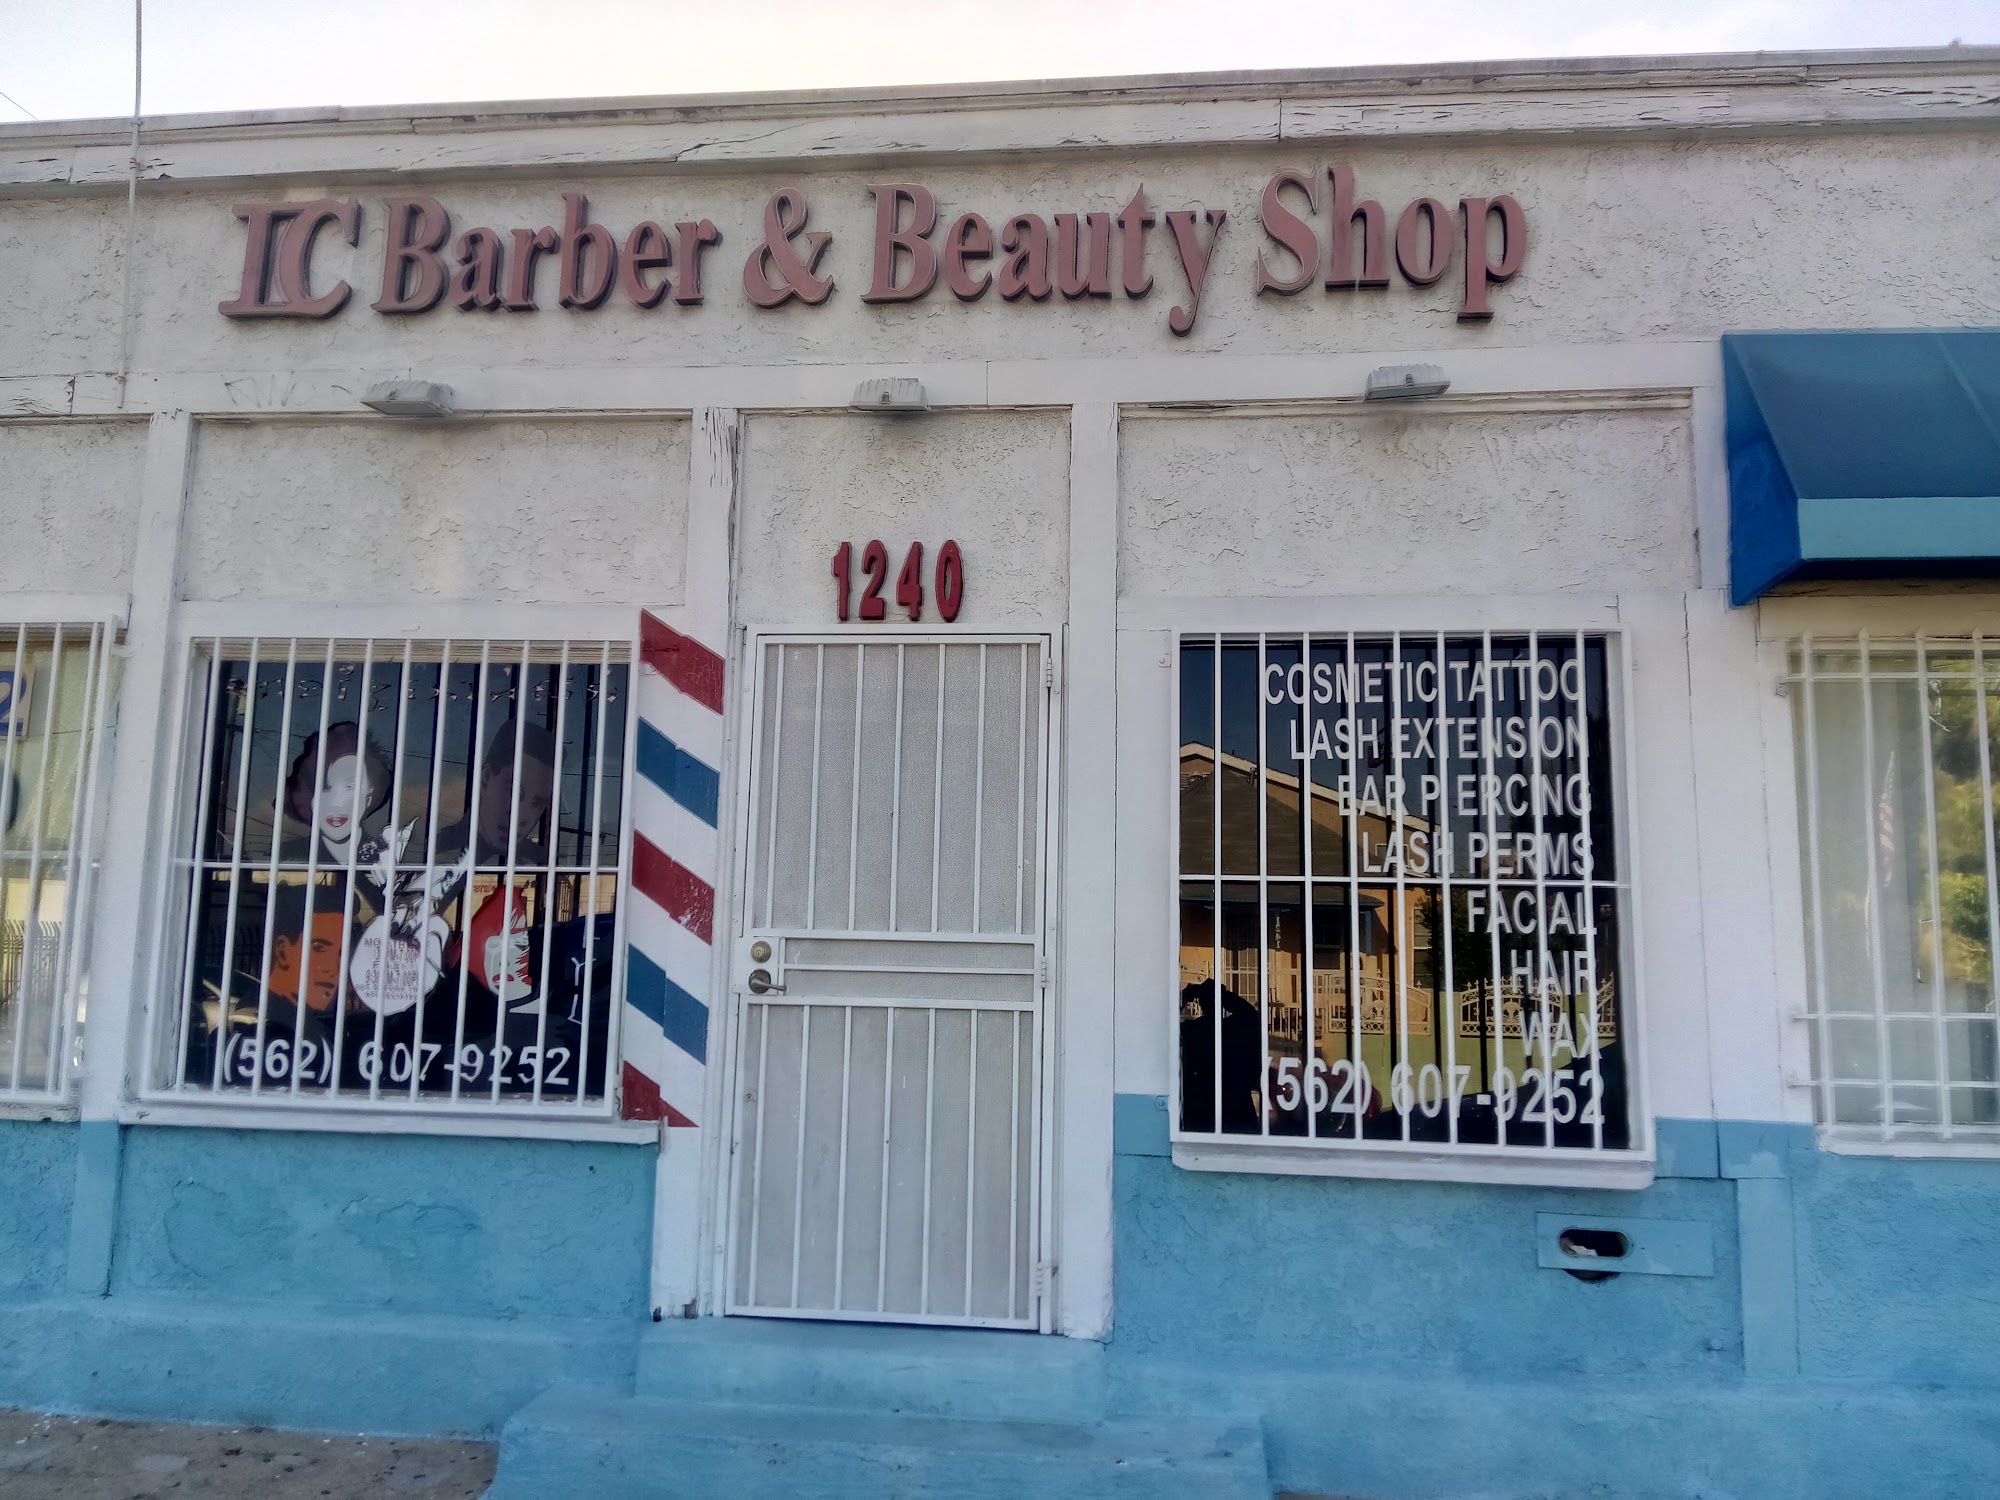 IC Barbershop Beauty Salon